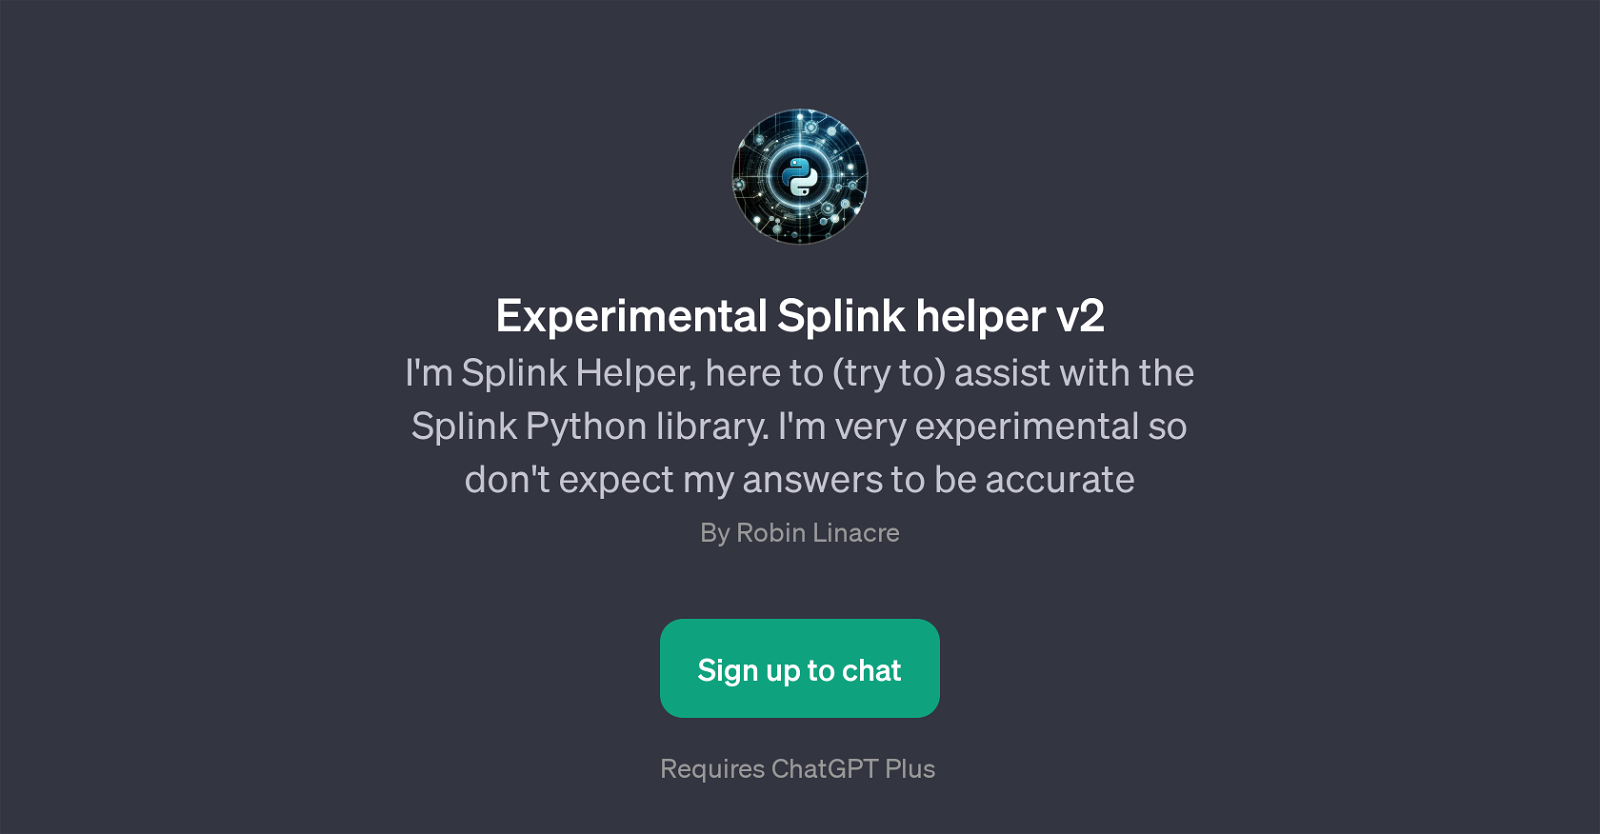 Experimental Splink helper v2 website